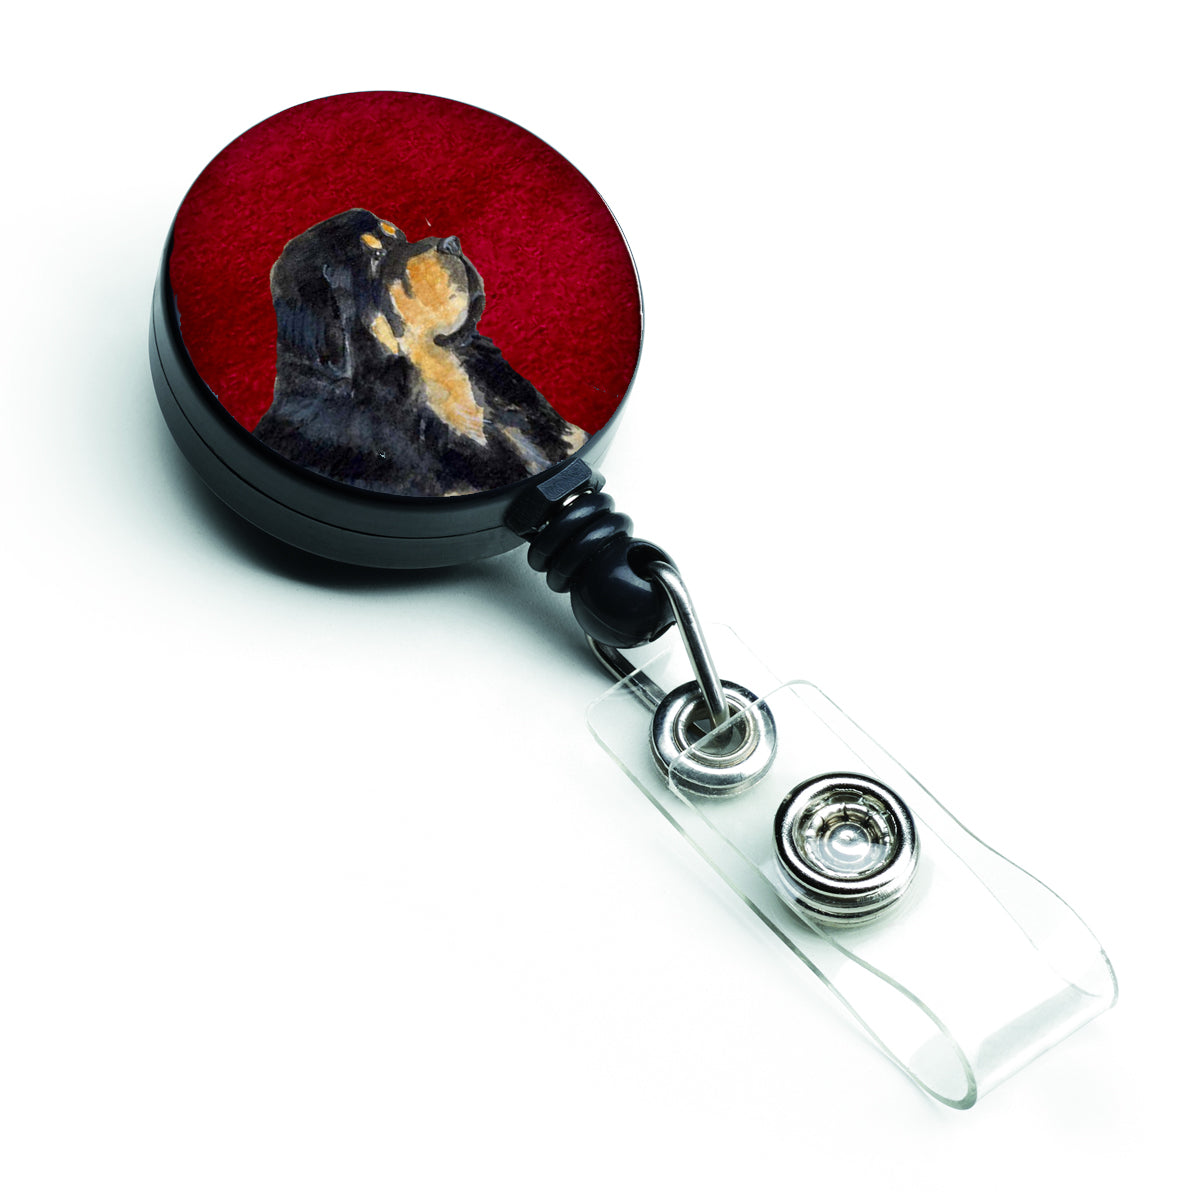 Tibetan Mastiff Retractable Badge Reel or ID Holder with Clip.